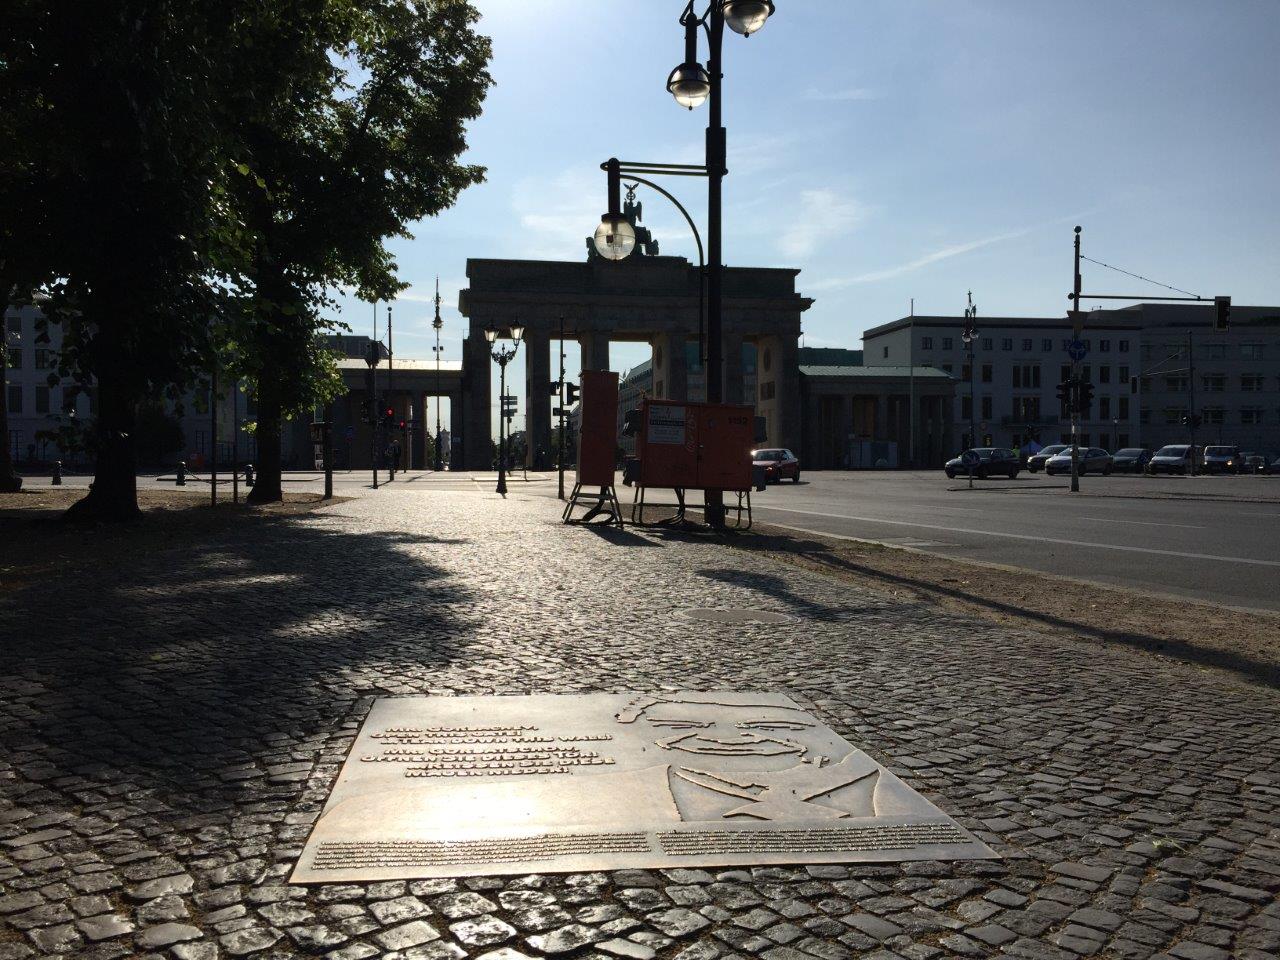 Ronald Reagan historical marker in Berlin, Deutschland at Brandenburger Tor